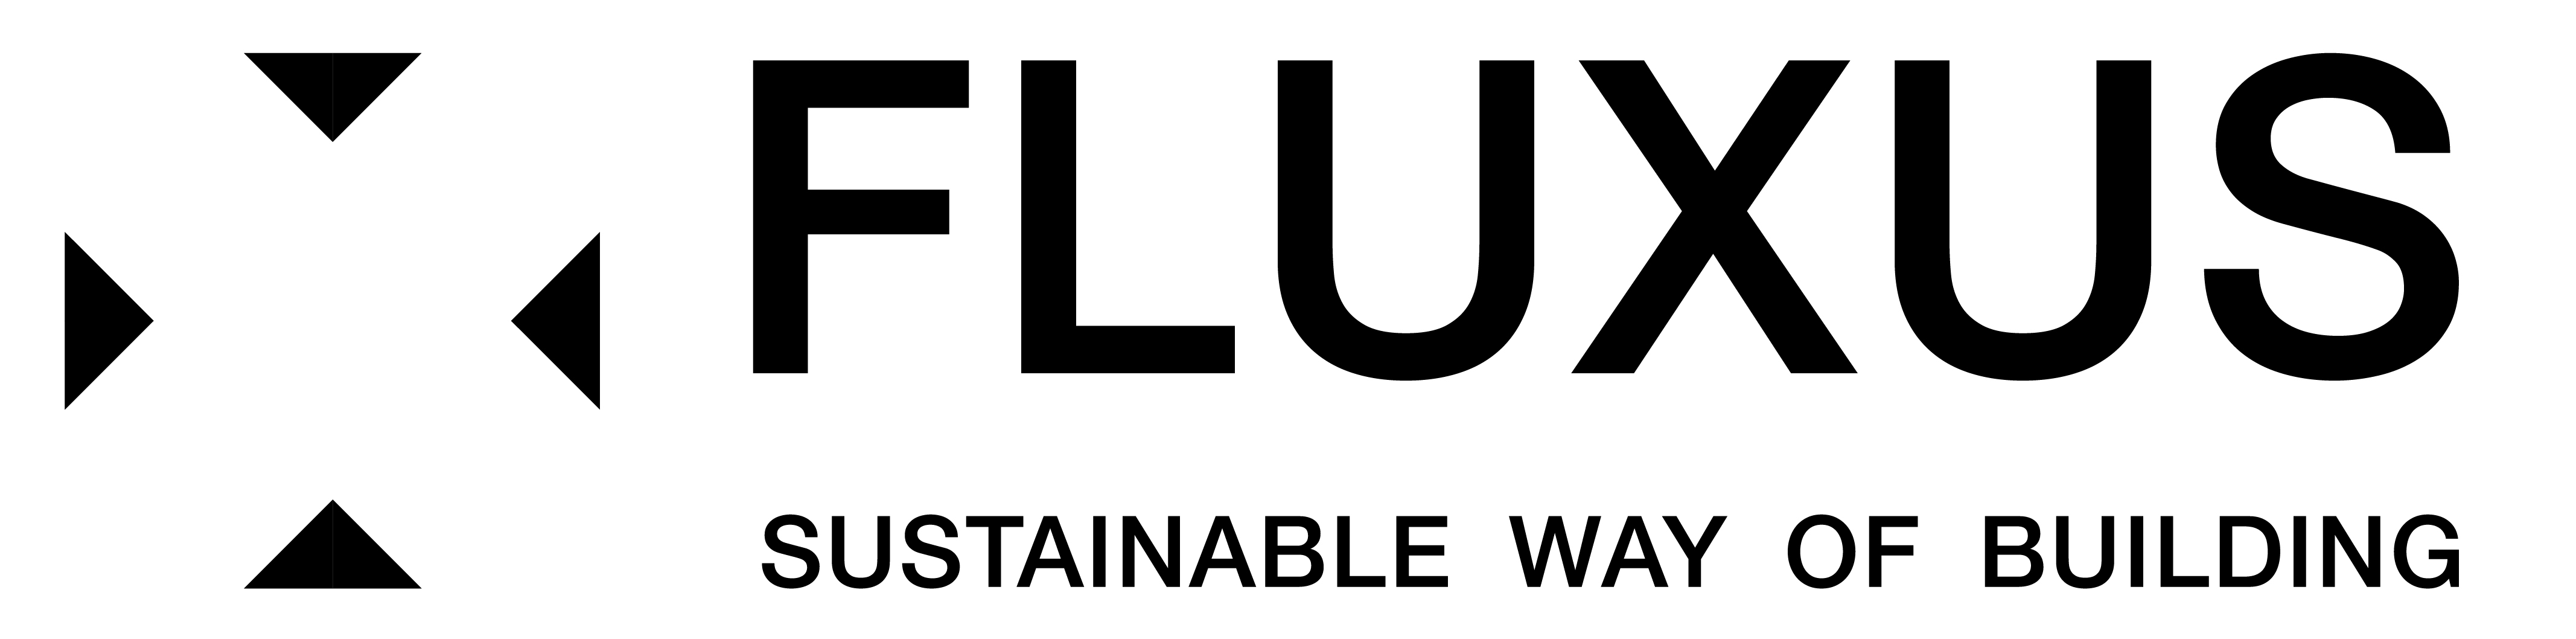 Fluxus llc logo (1).jpg